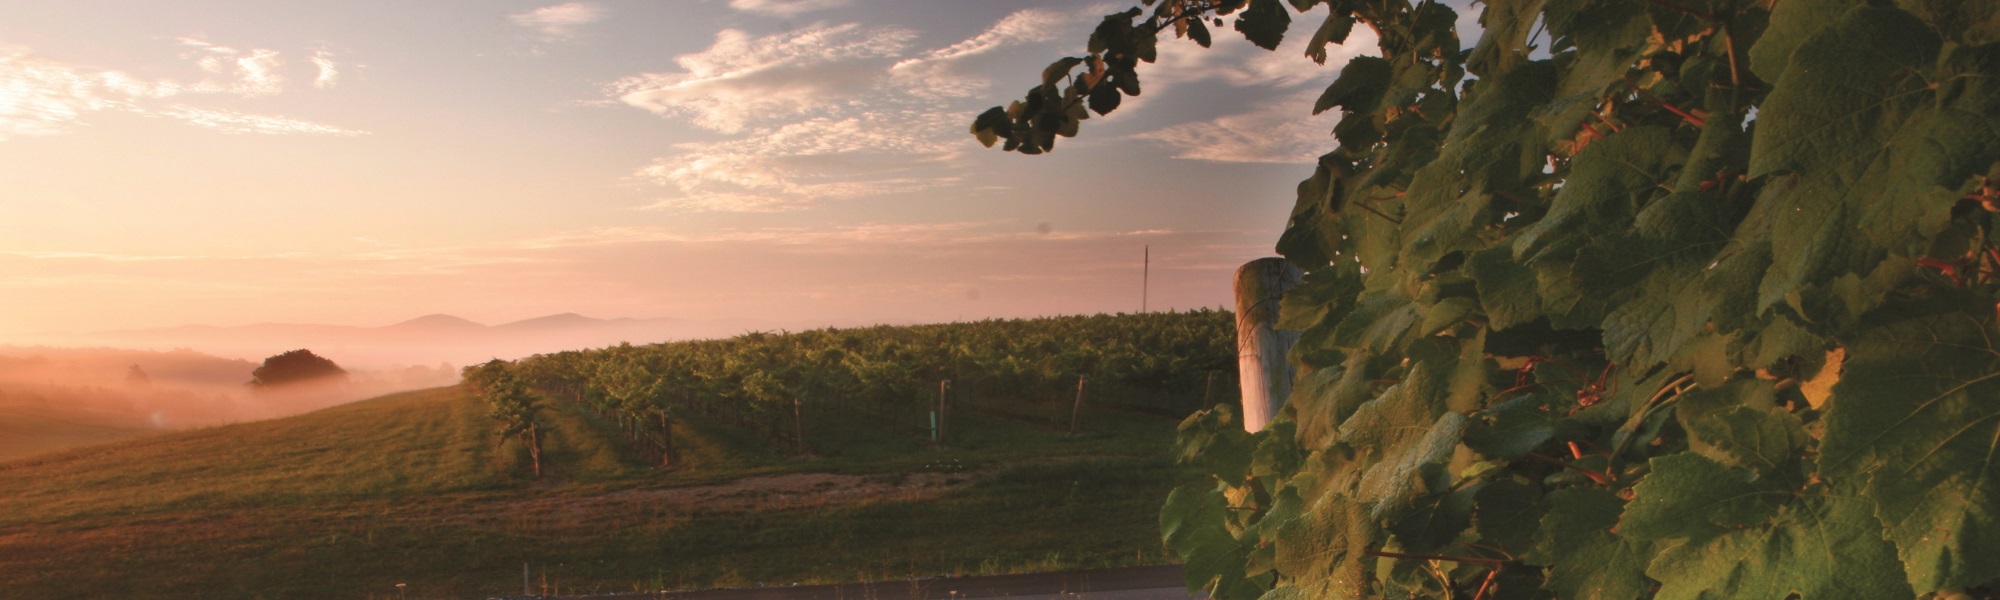 Shenendoah Valley Winery - Grapevine